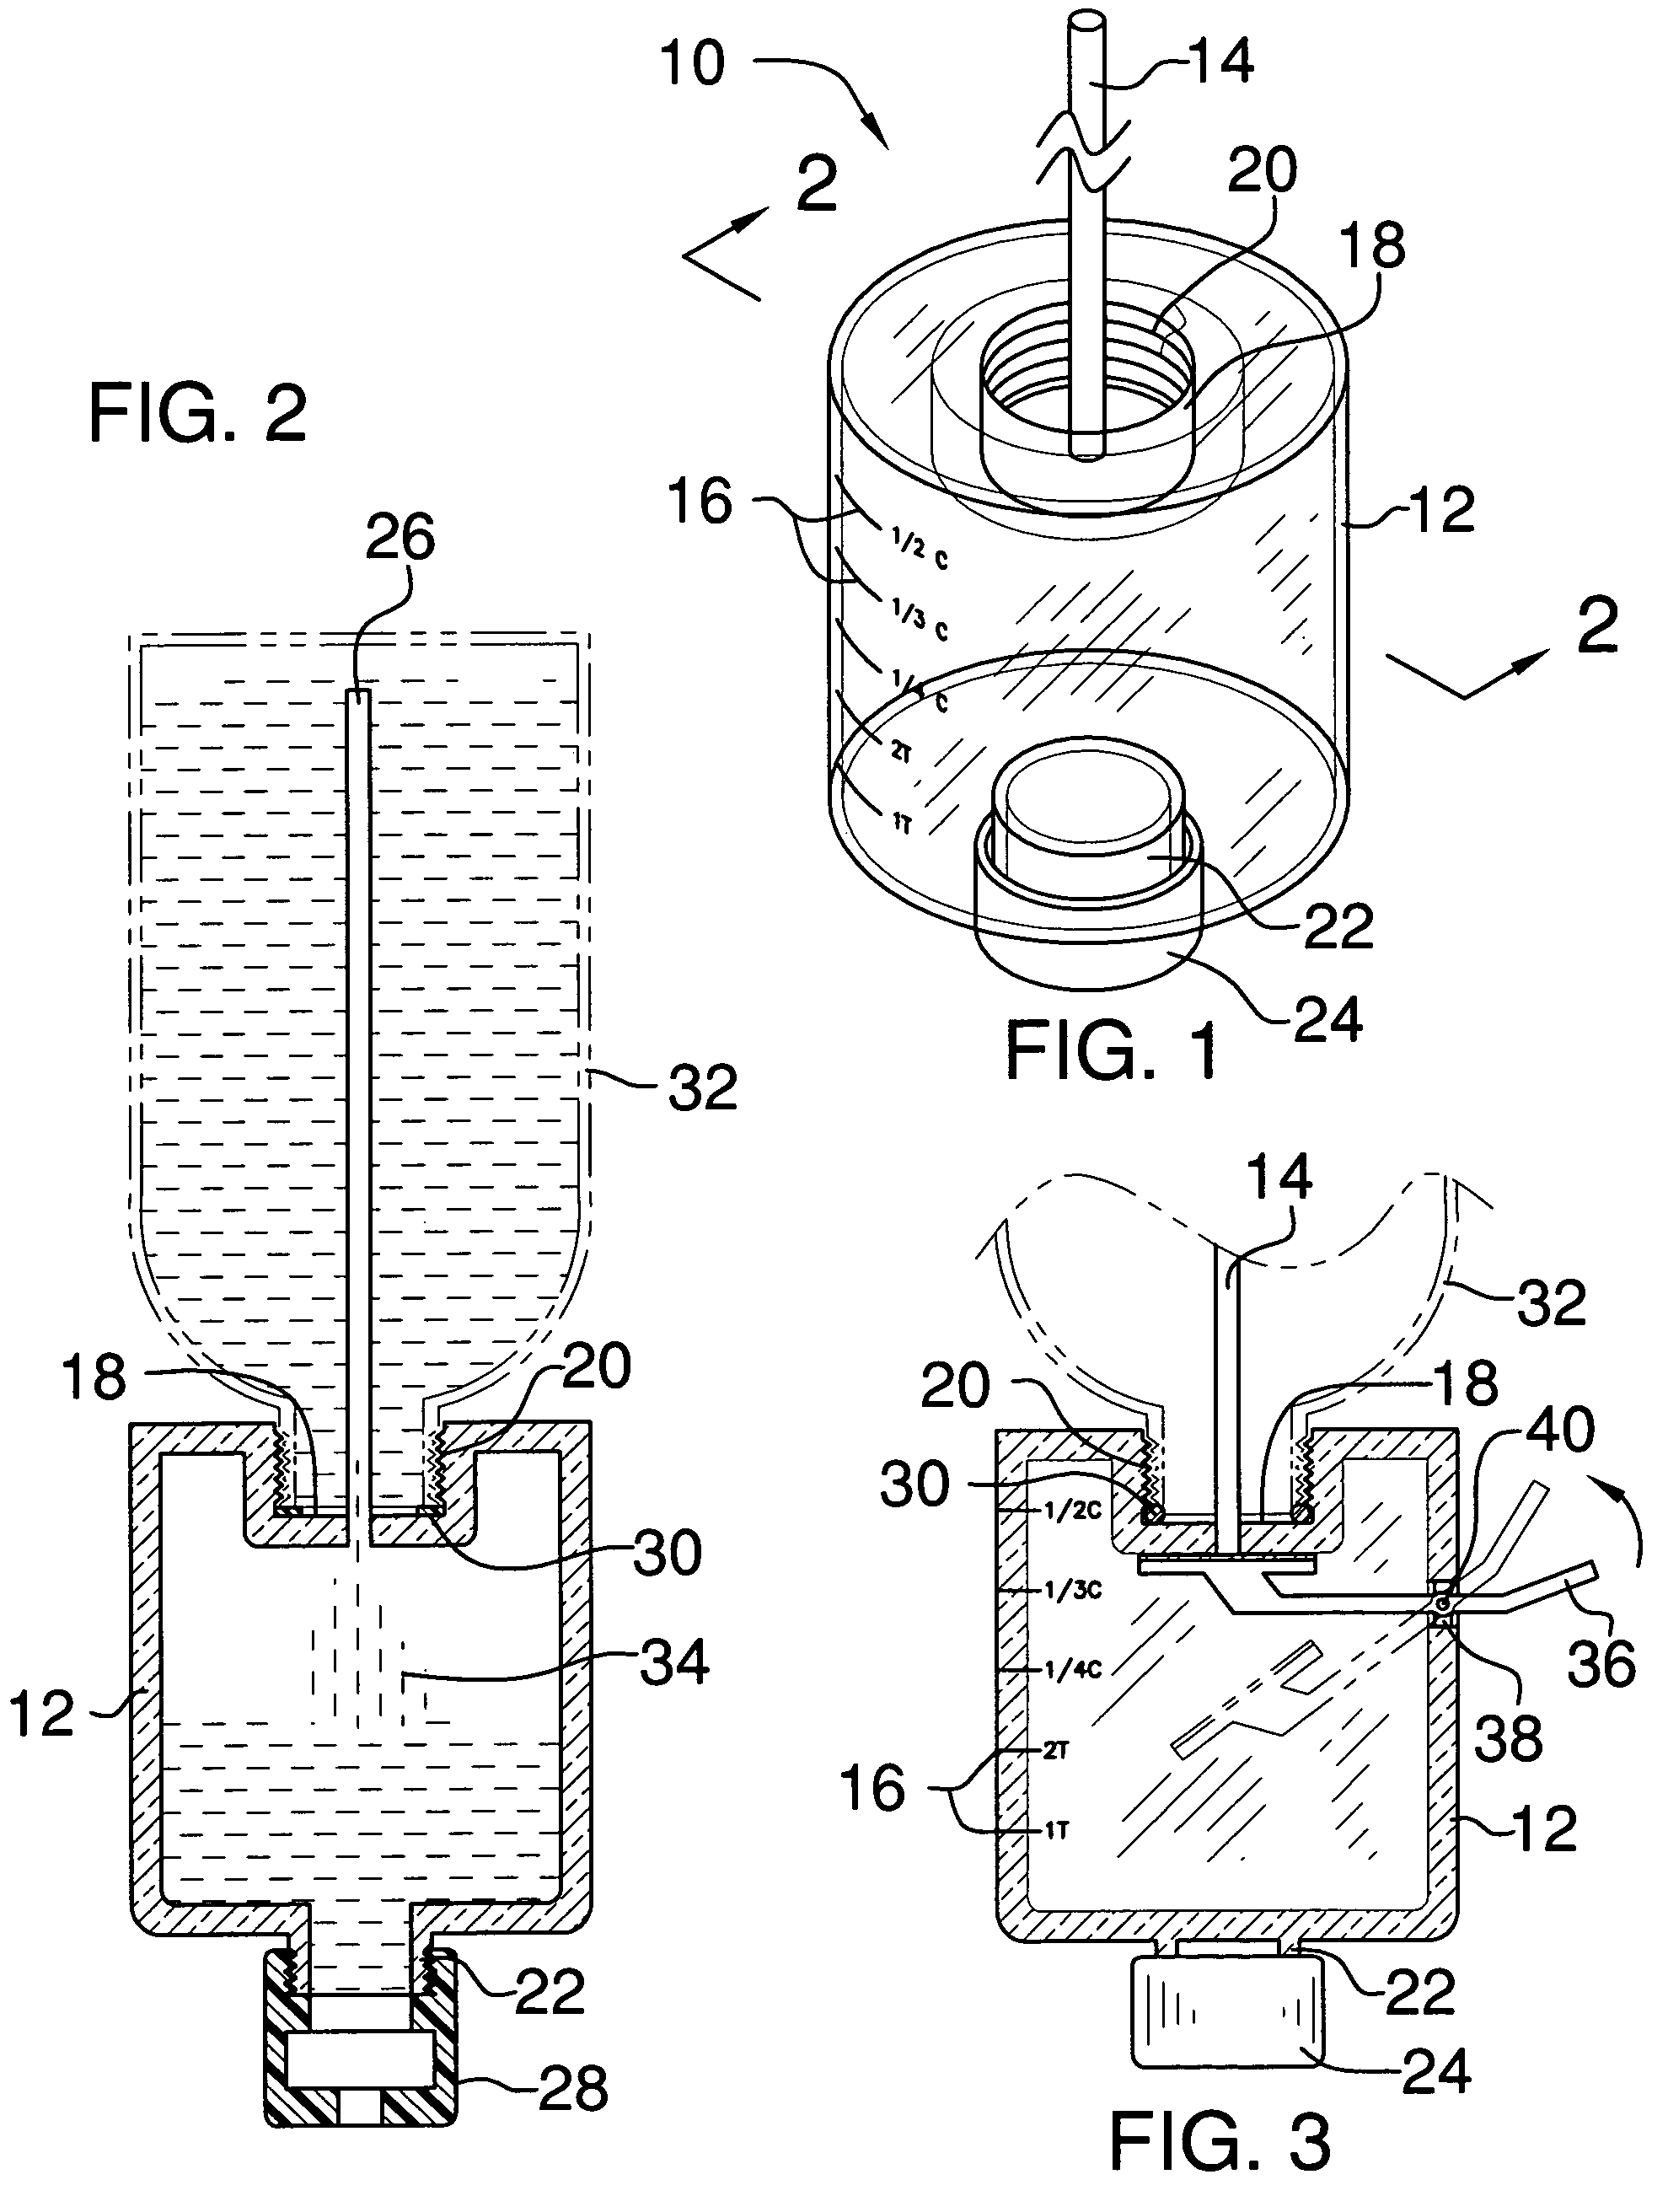 Liquid measuring and dispensing device